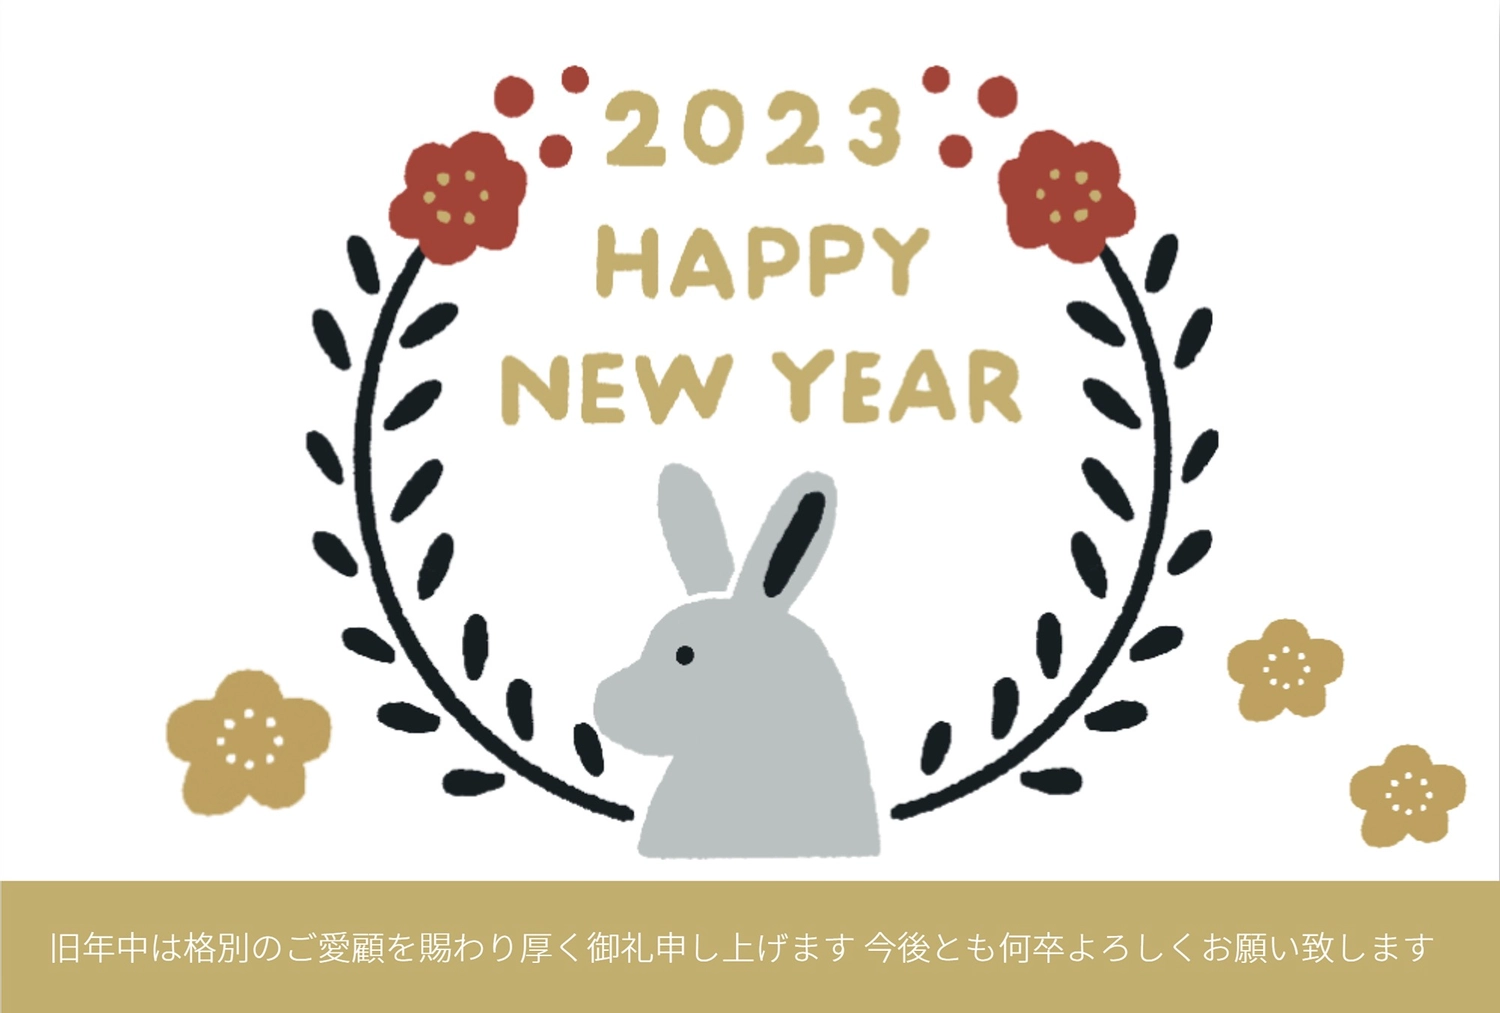 横向きうさぎの年賀状, Hợp thời trang, lề, Chúc mừng năm mới, Thiệp năm mới mẫu